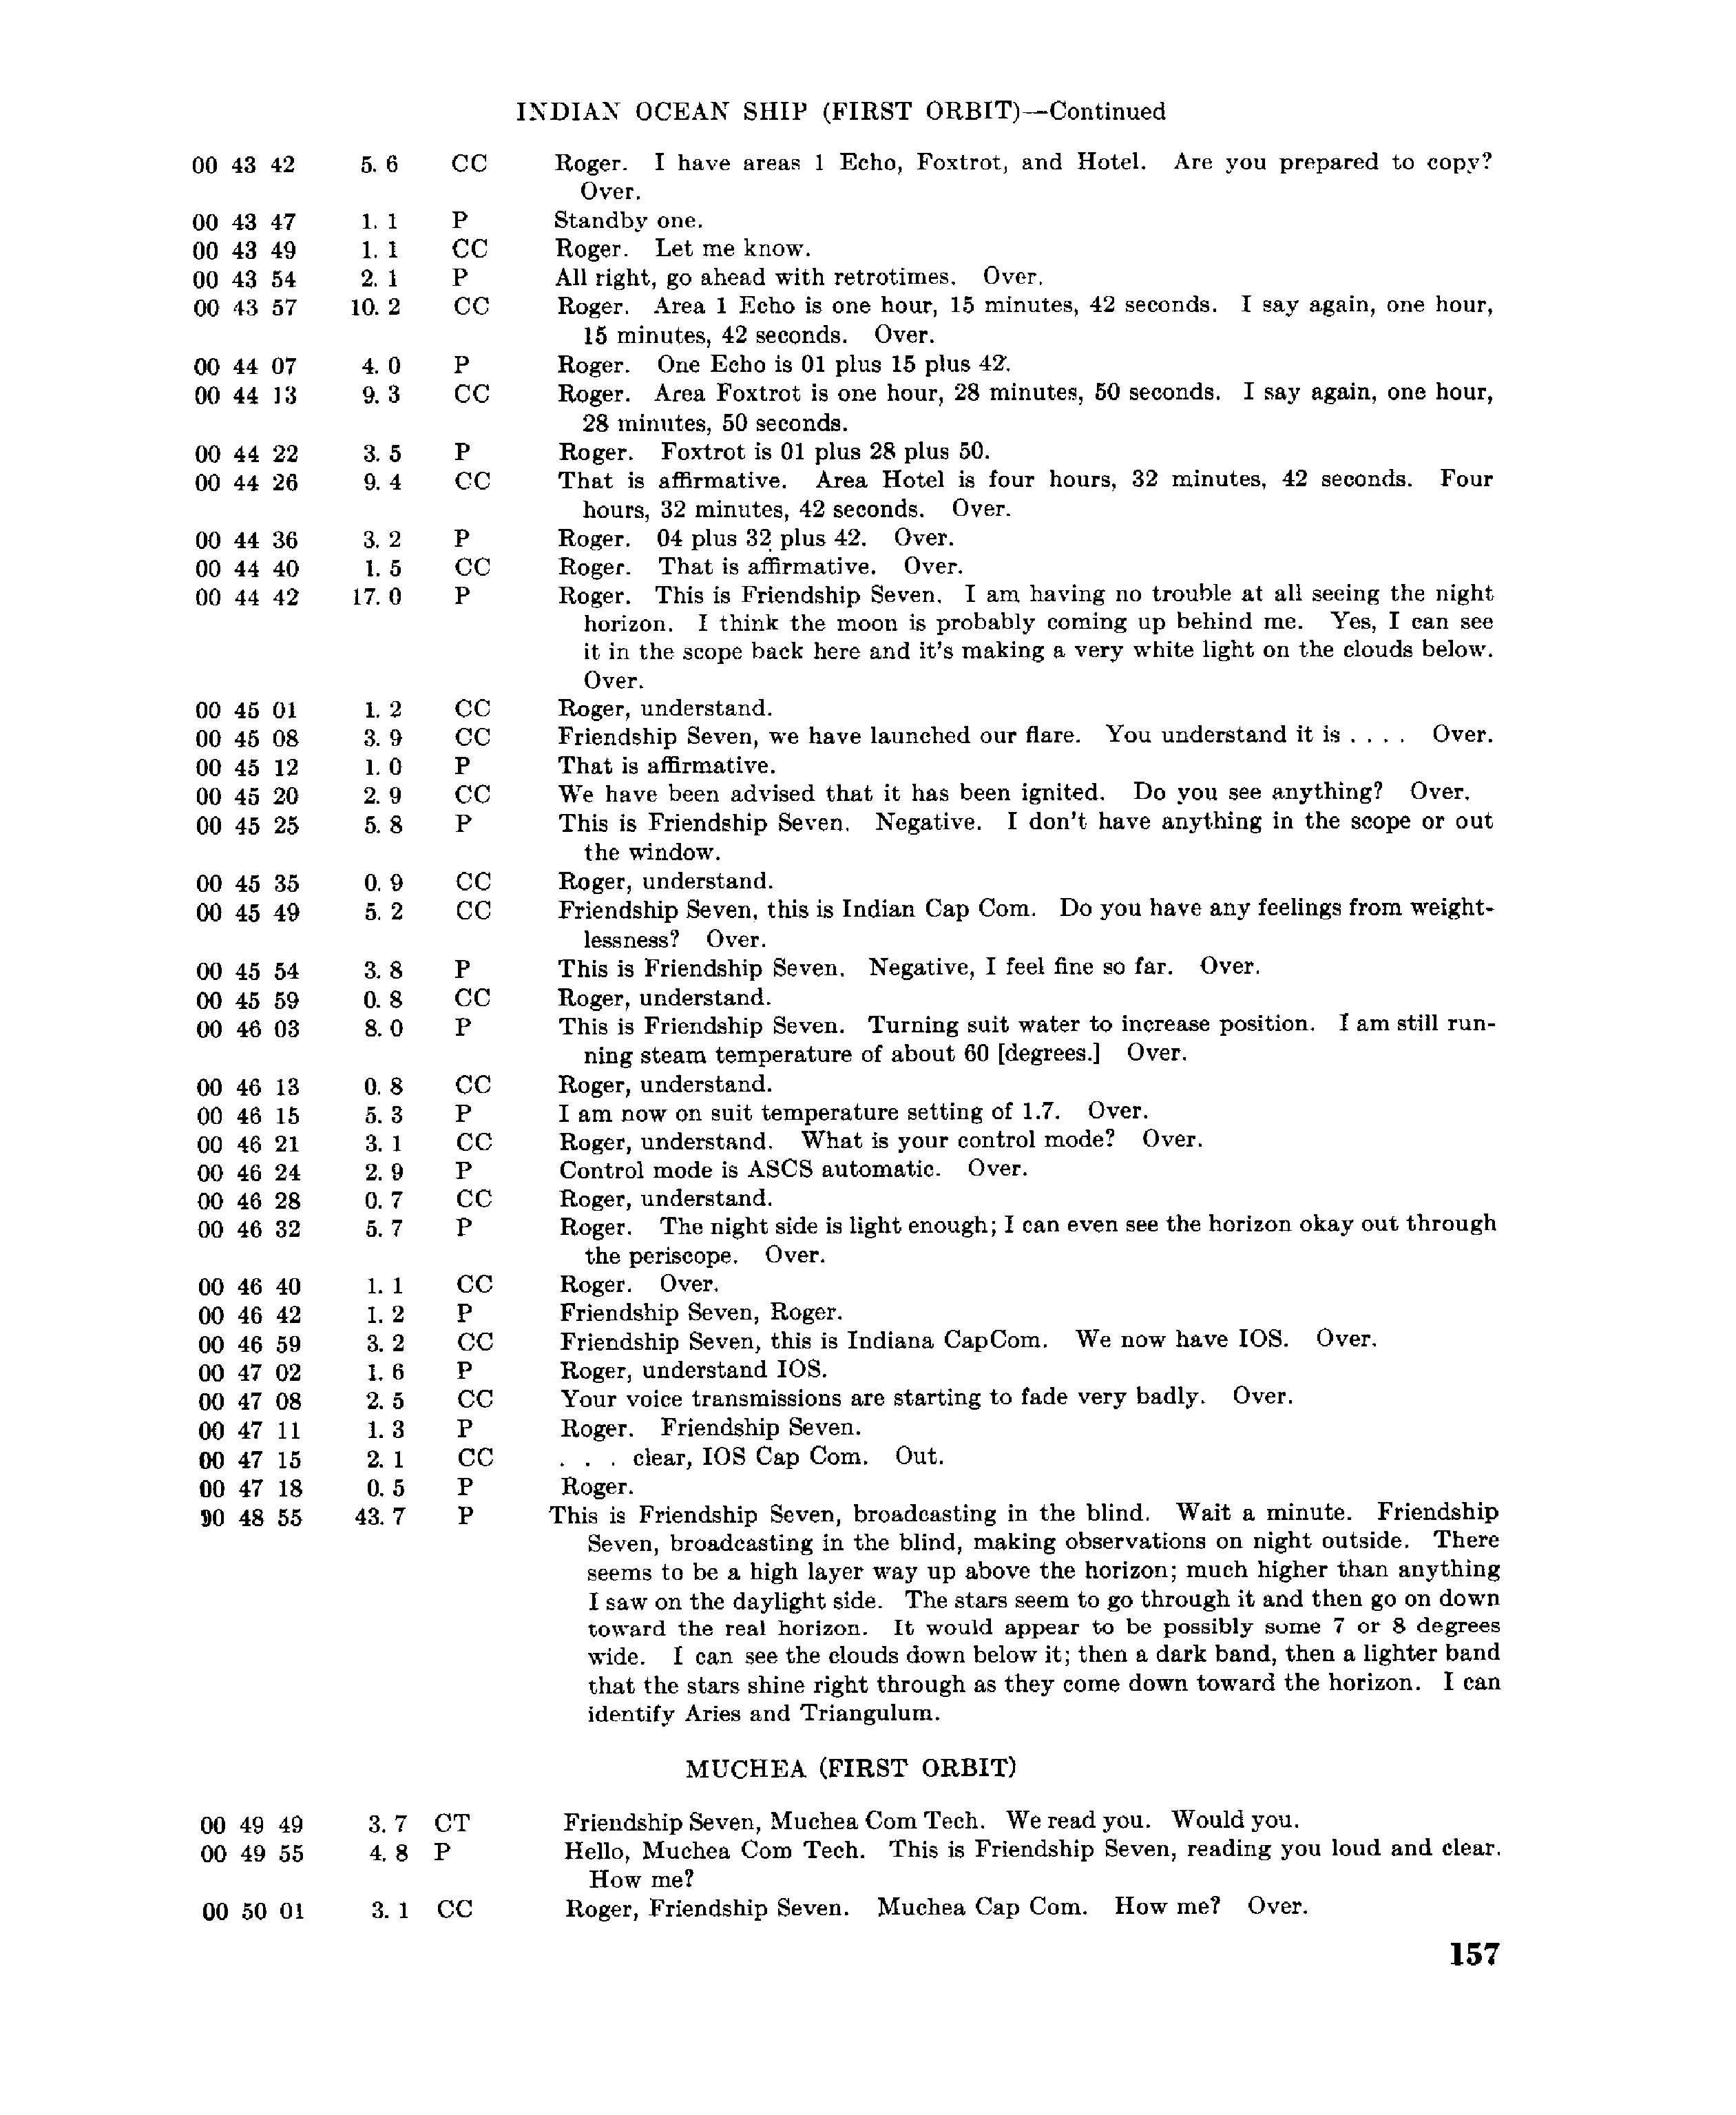 Page 156 of Mercury 6’s original transcript